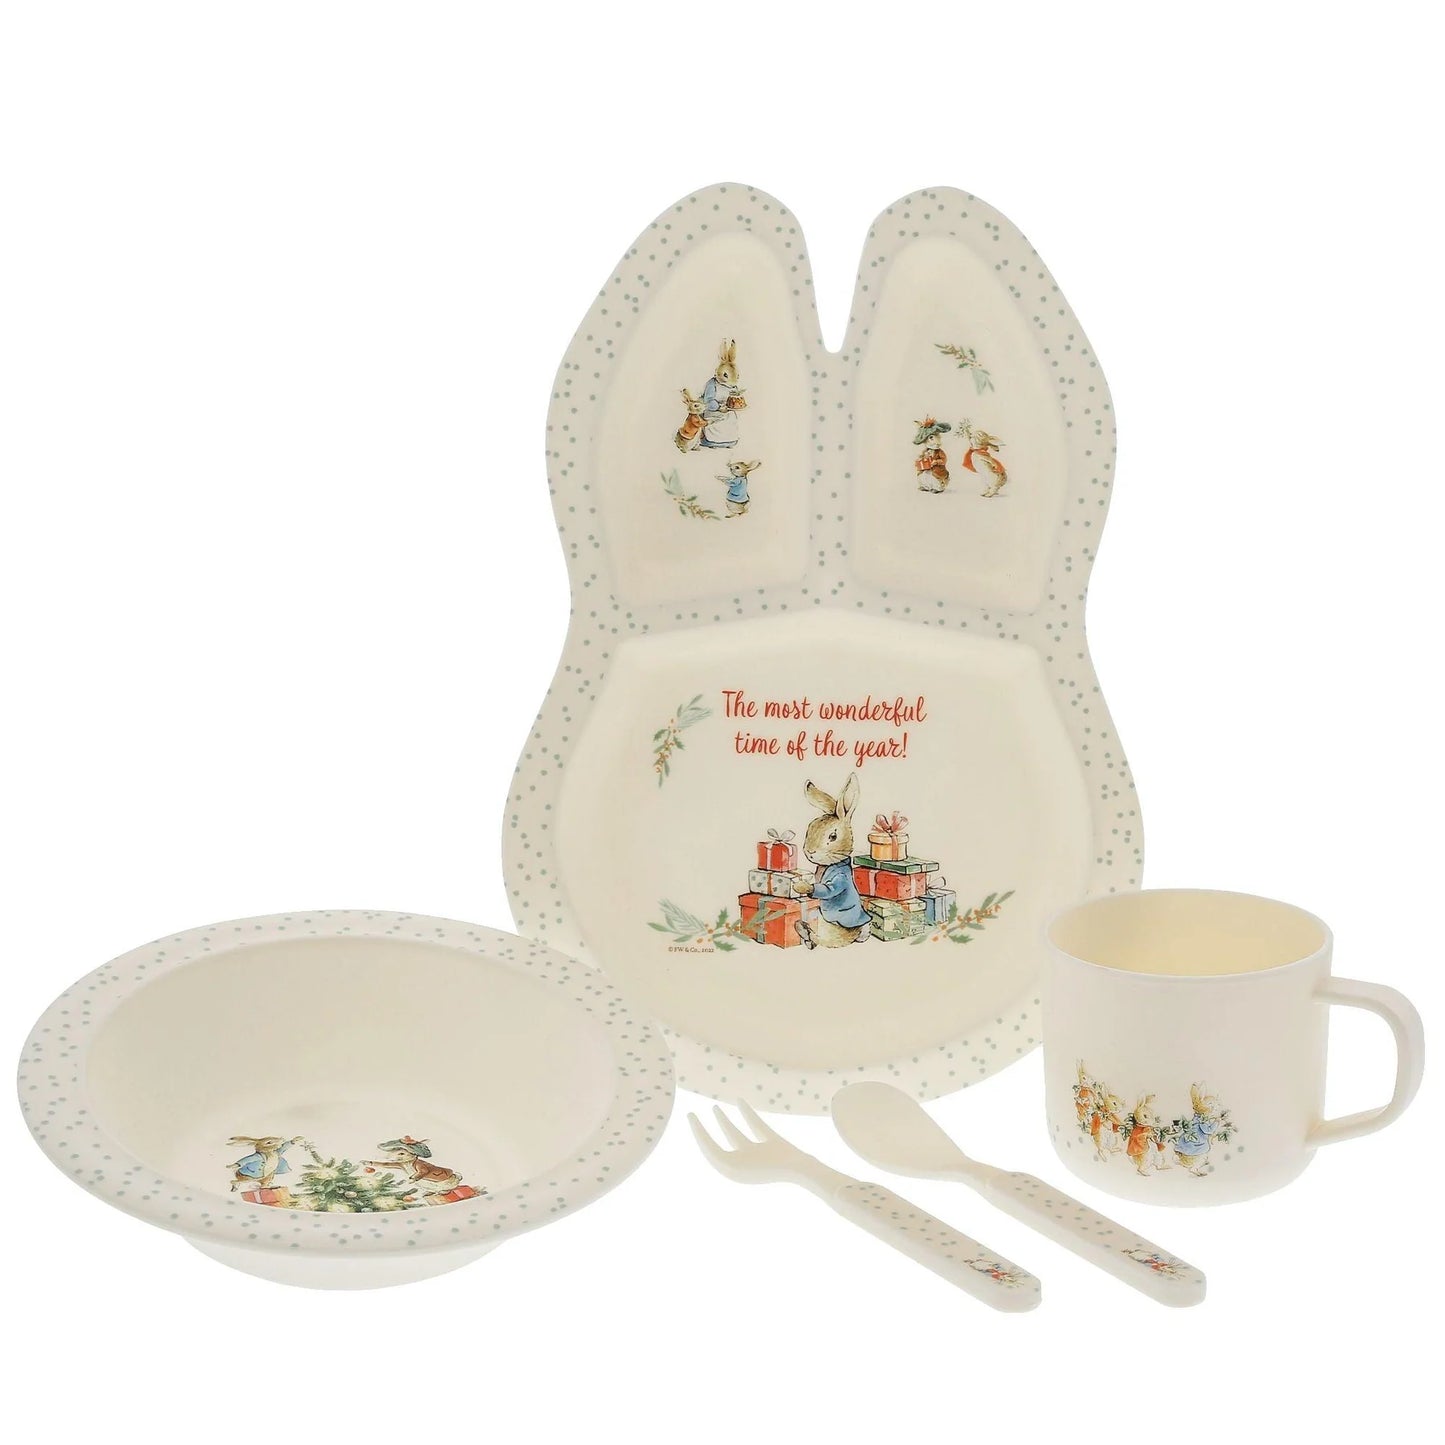 Peter Rabbit Christmas Dinner Set by Beatrix Potter